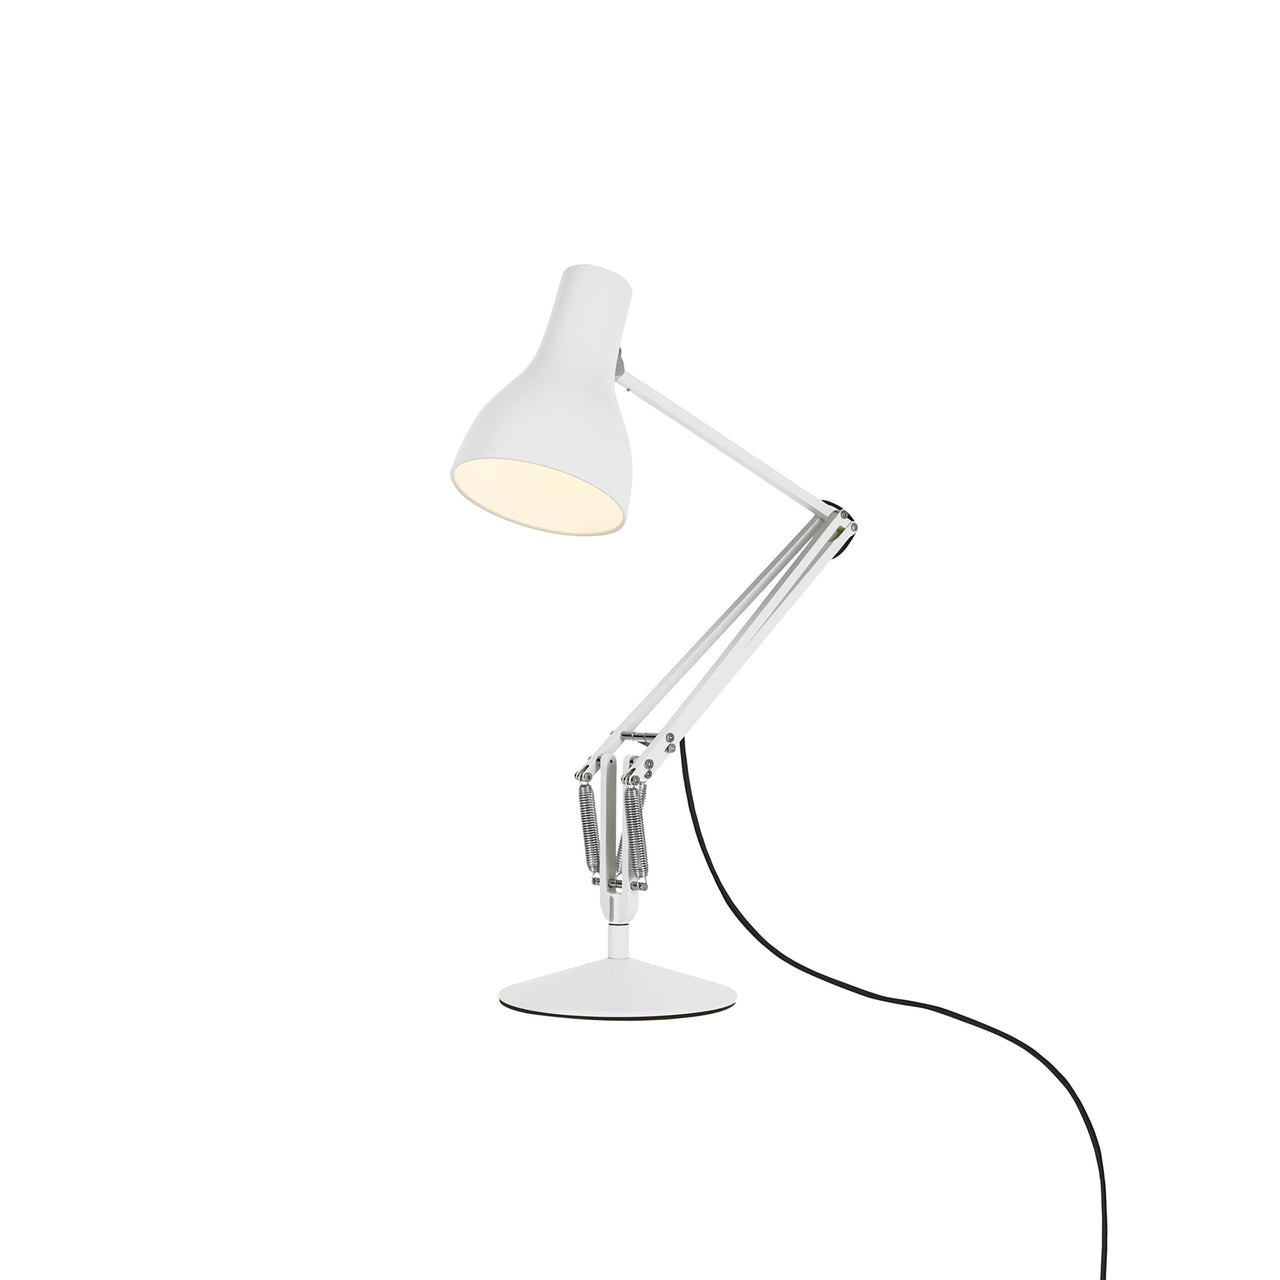 Type 75 Mini Desk Lamp with Insert: Alpine White